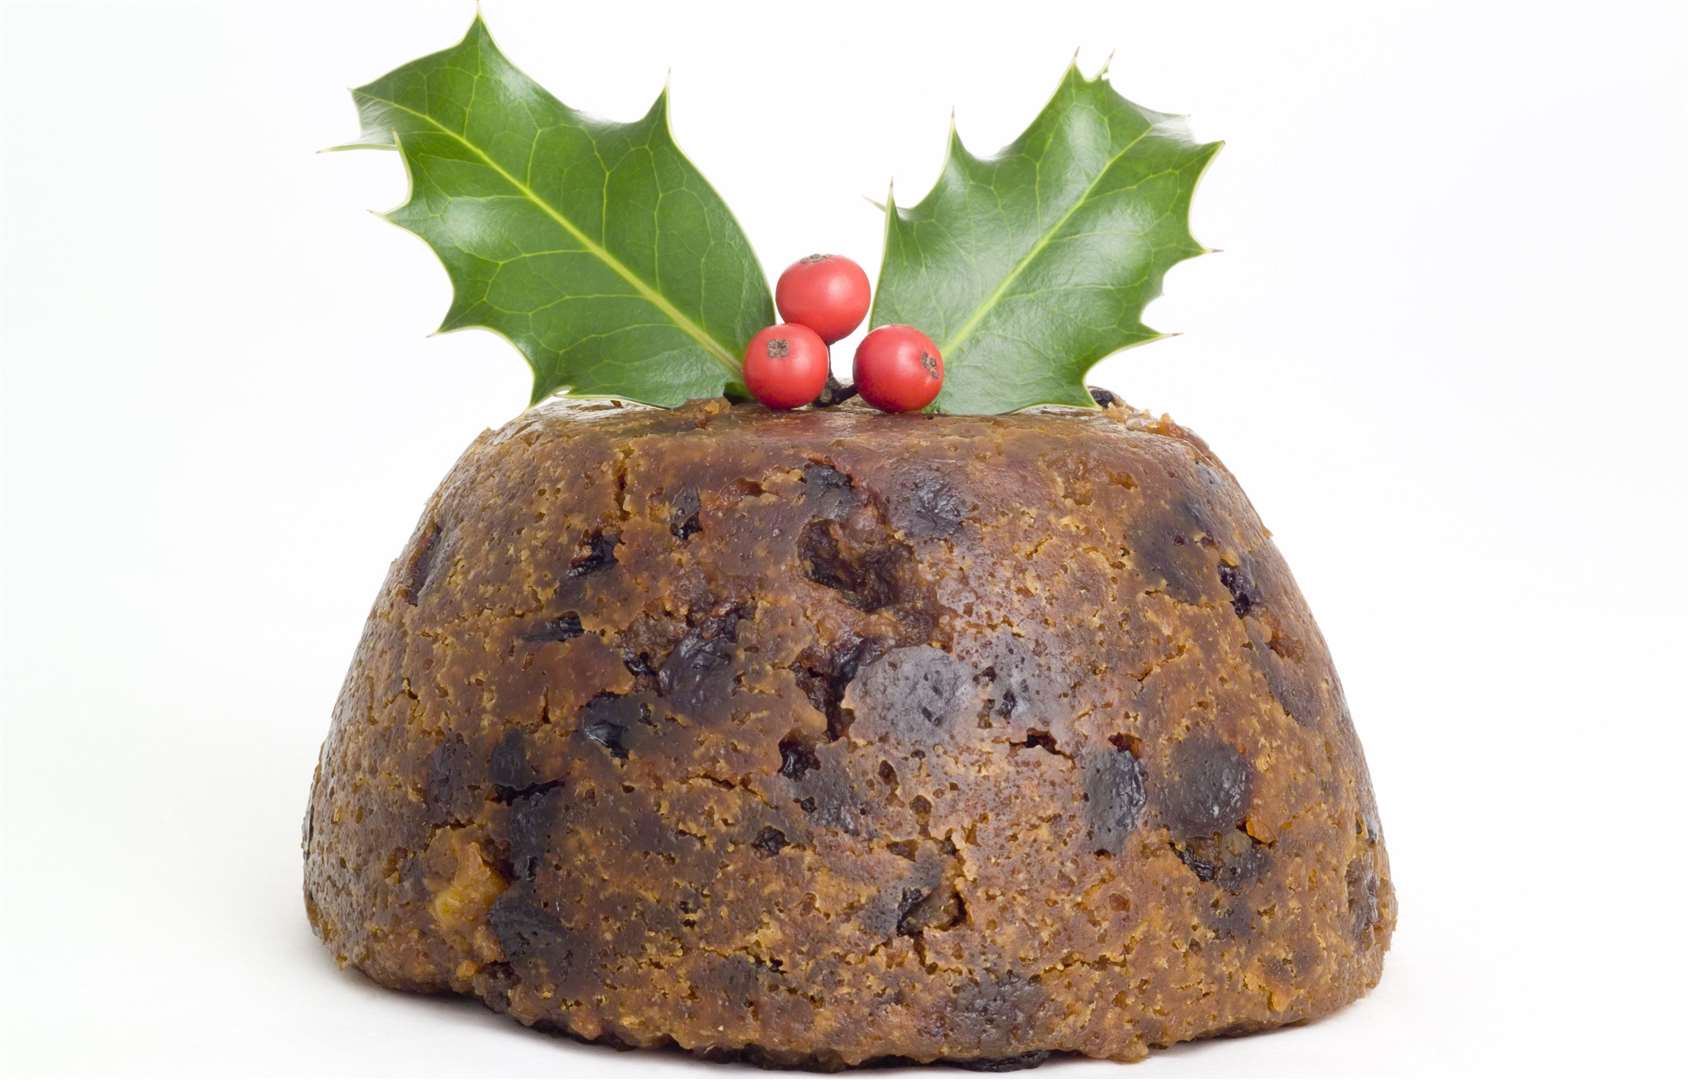 It's time to make your Christmas pud